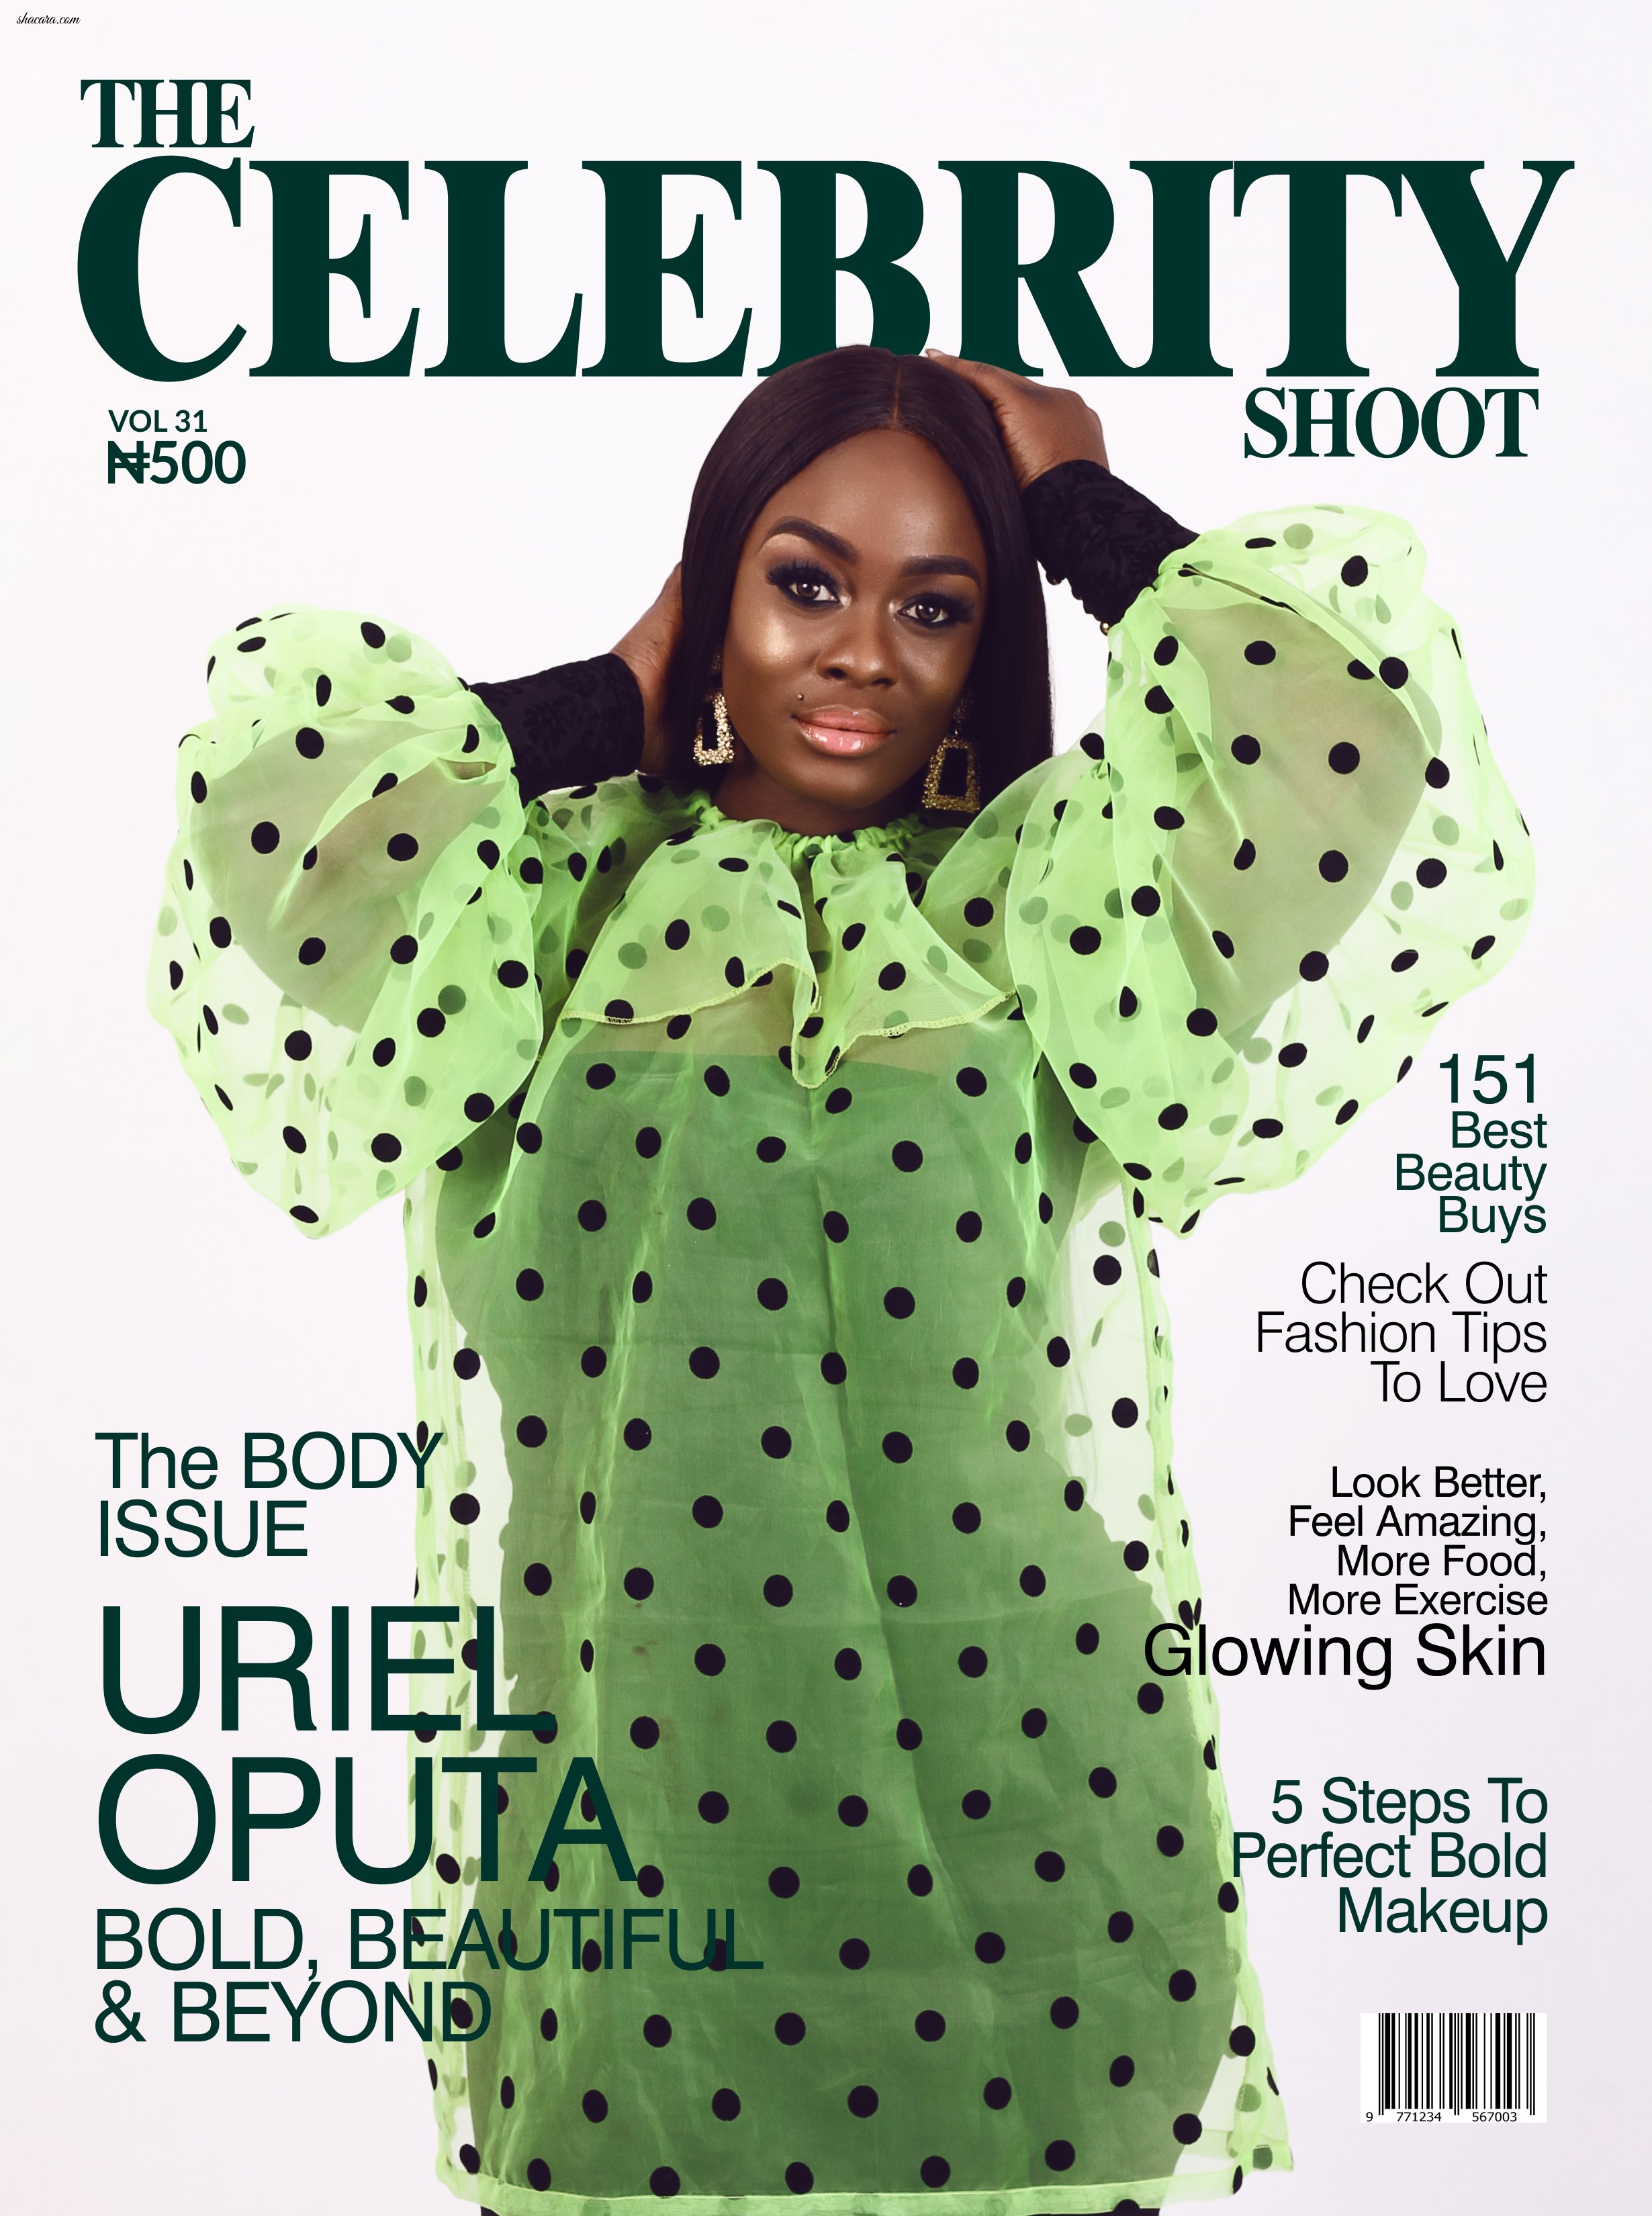 Bold, Beautiful & Beyond! Uriel Oputa Covers Celebrity Shoot Magazine’s Latest Issue